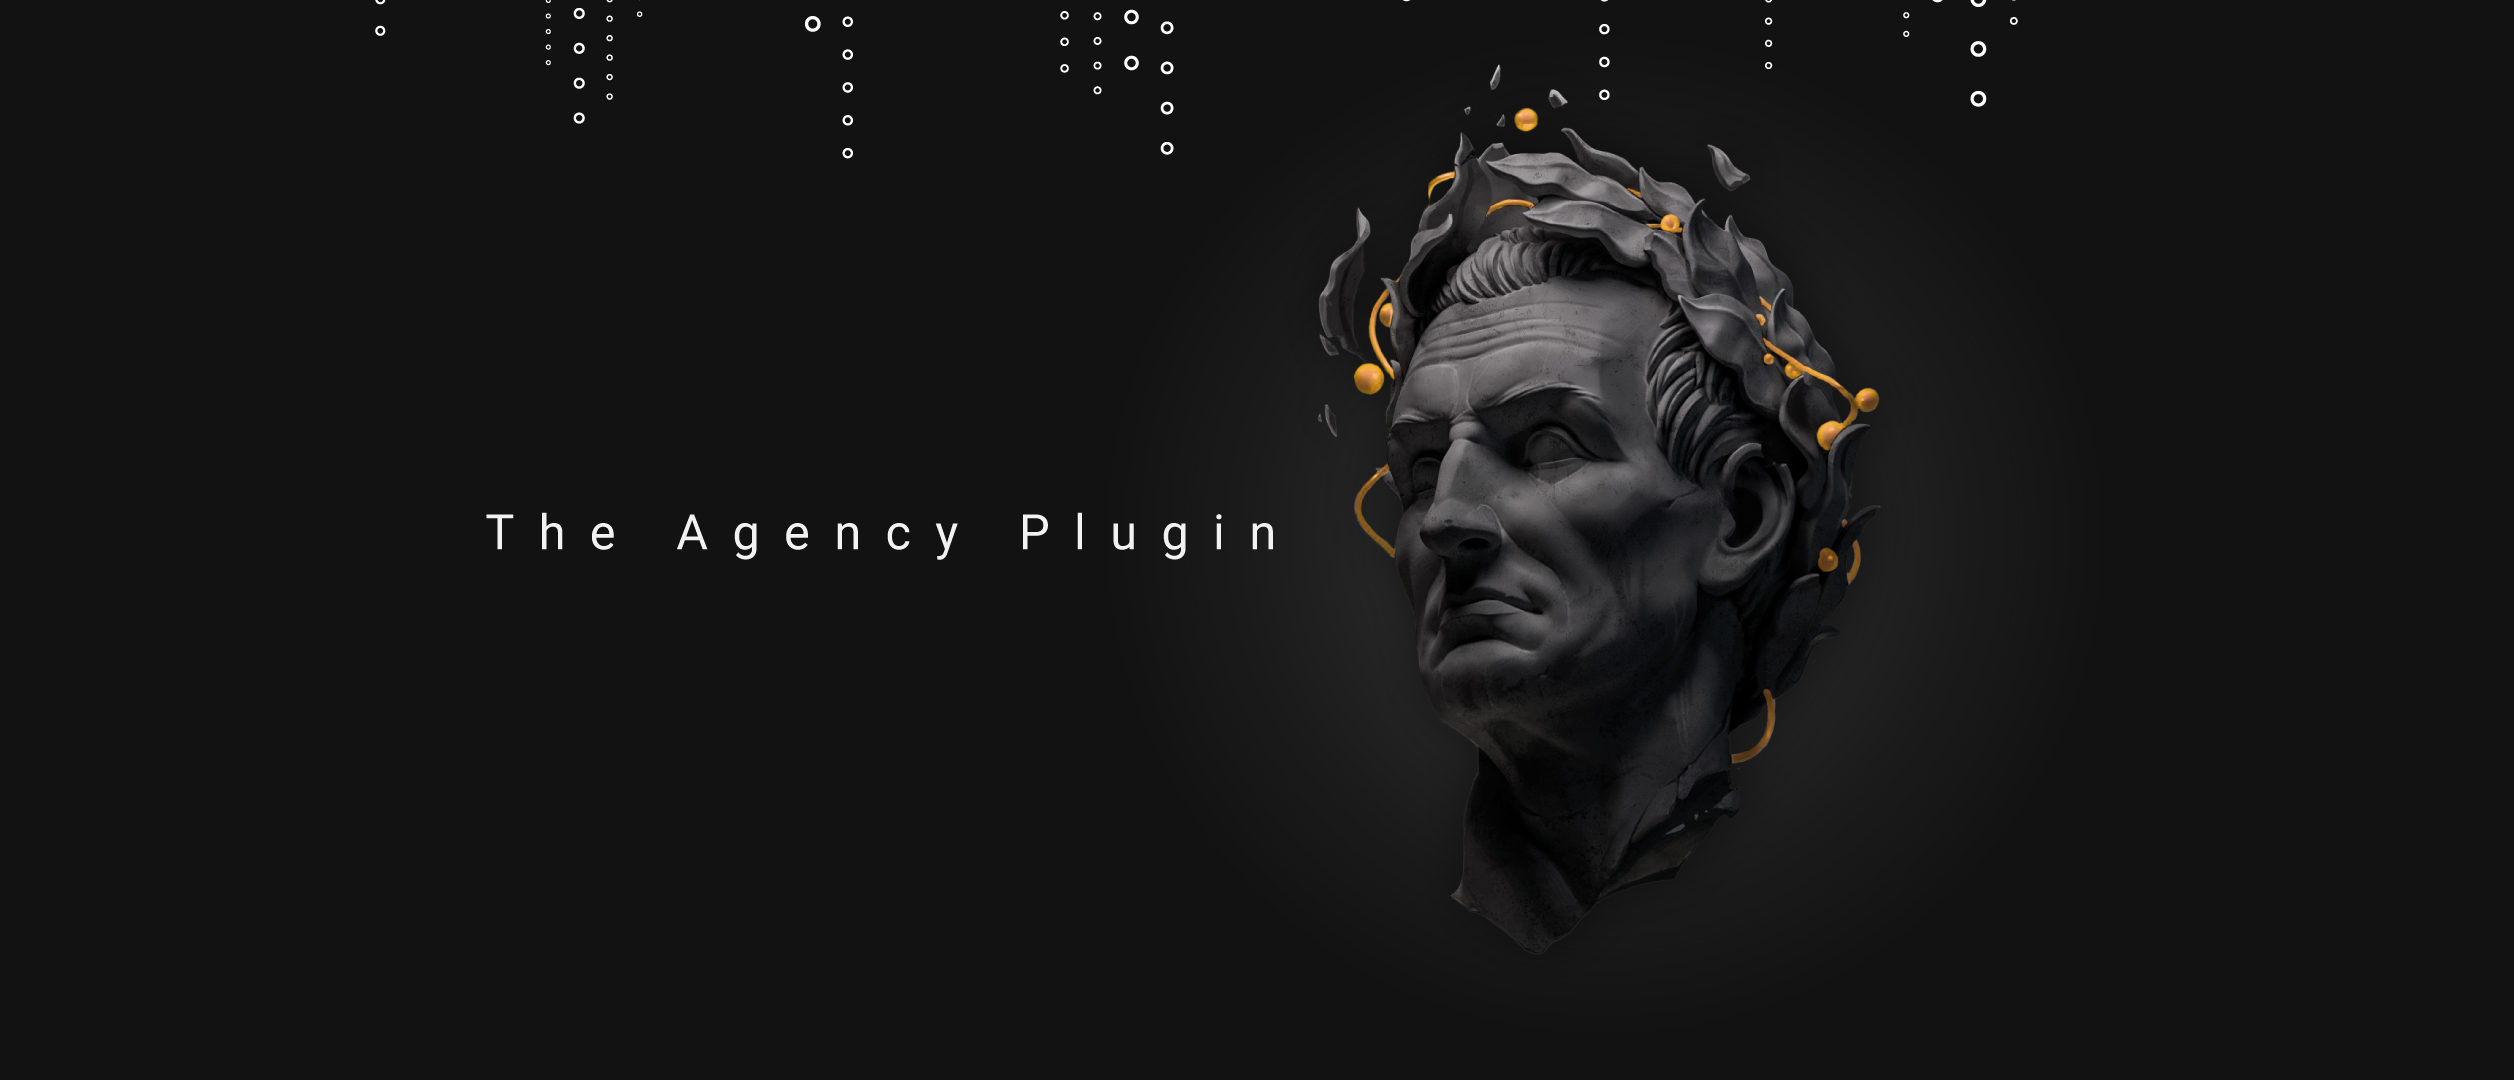 The Agency Plugin